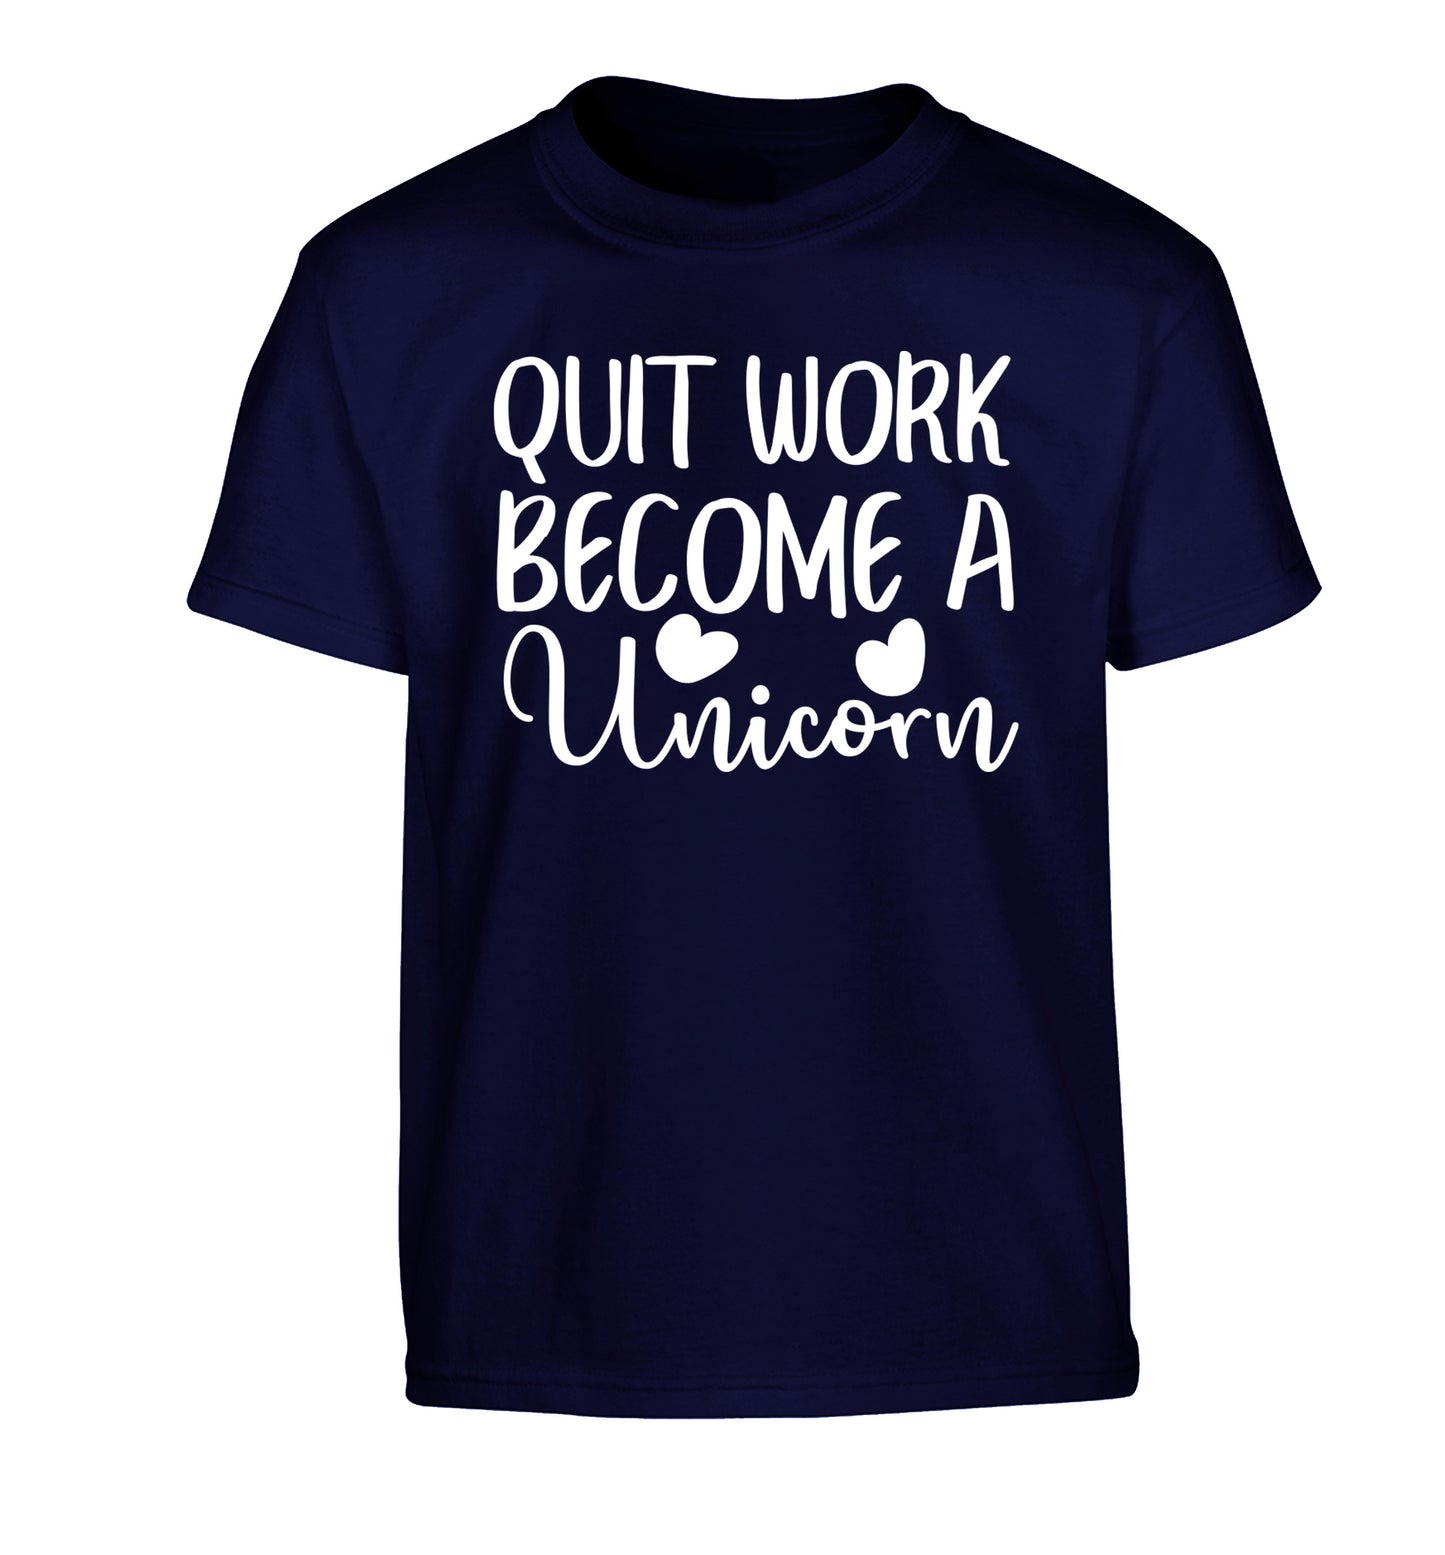 Quit work become a unicorn Children's navy Tshirt 12-13 Years